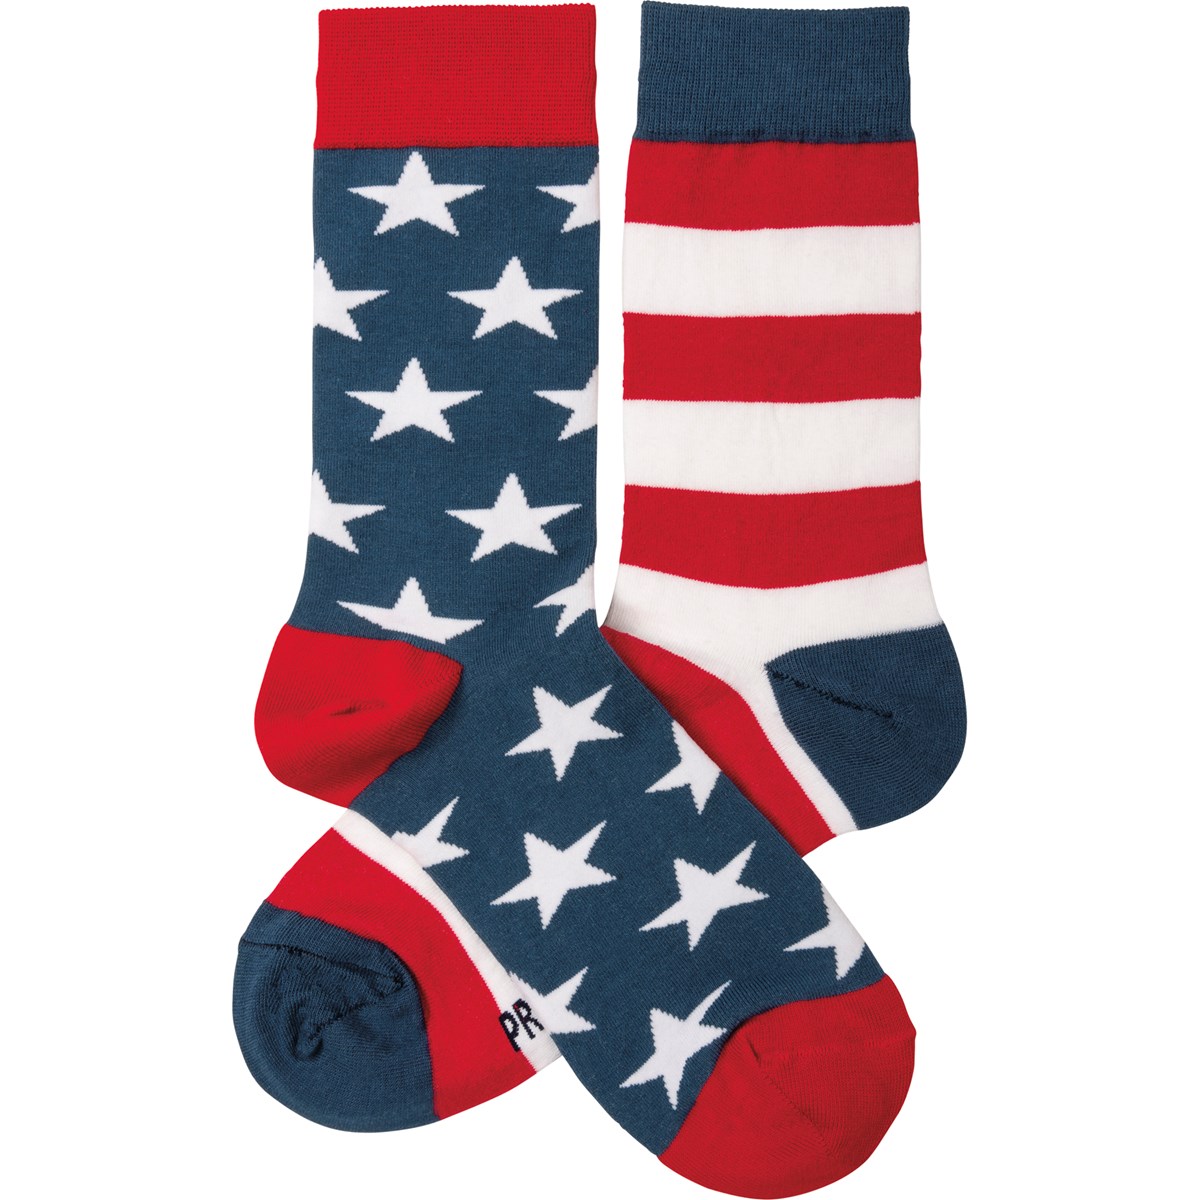 Socks - Stars & Stripes - One Size Fits Most - Cotton, Nylon, Spandex